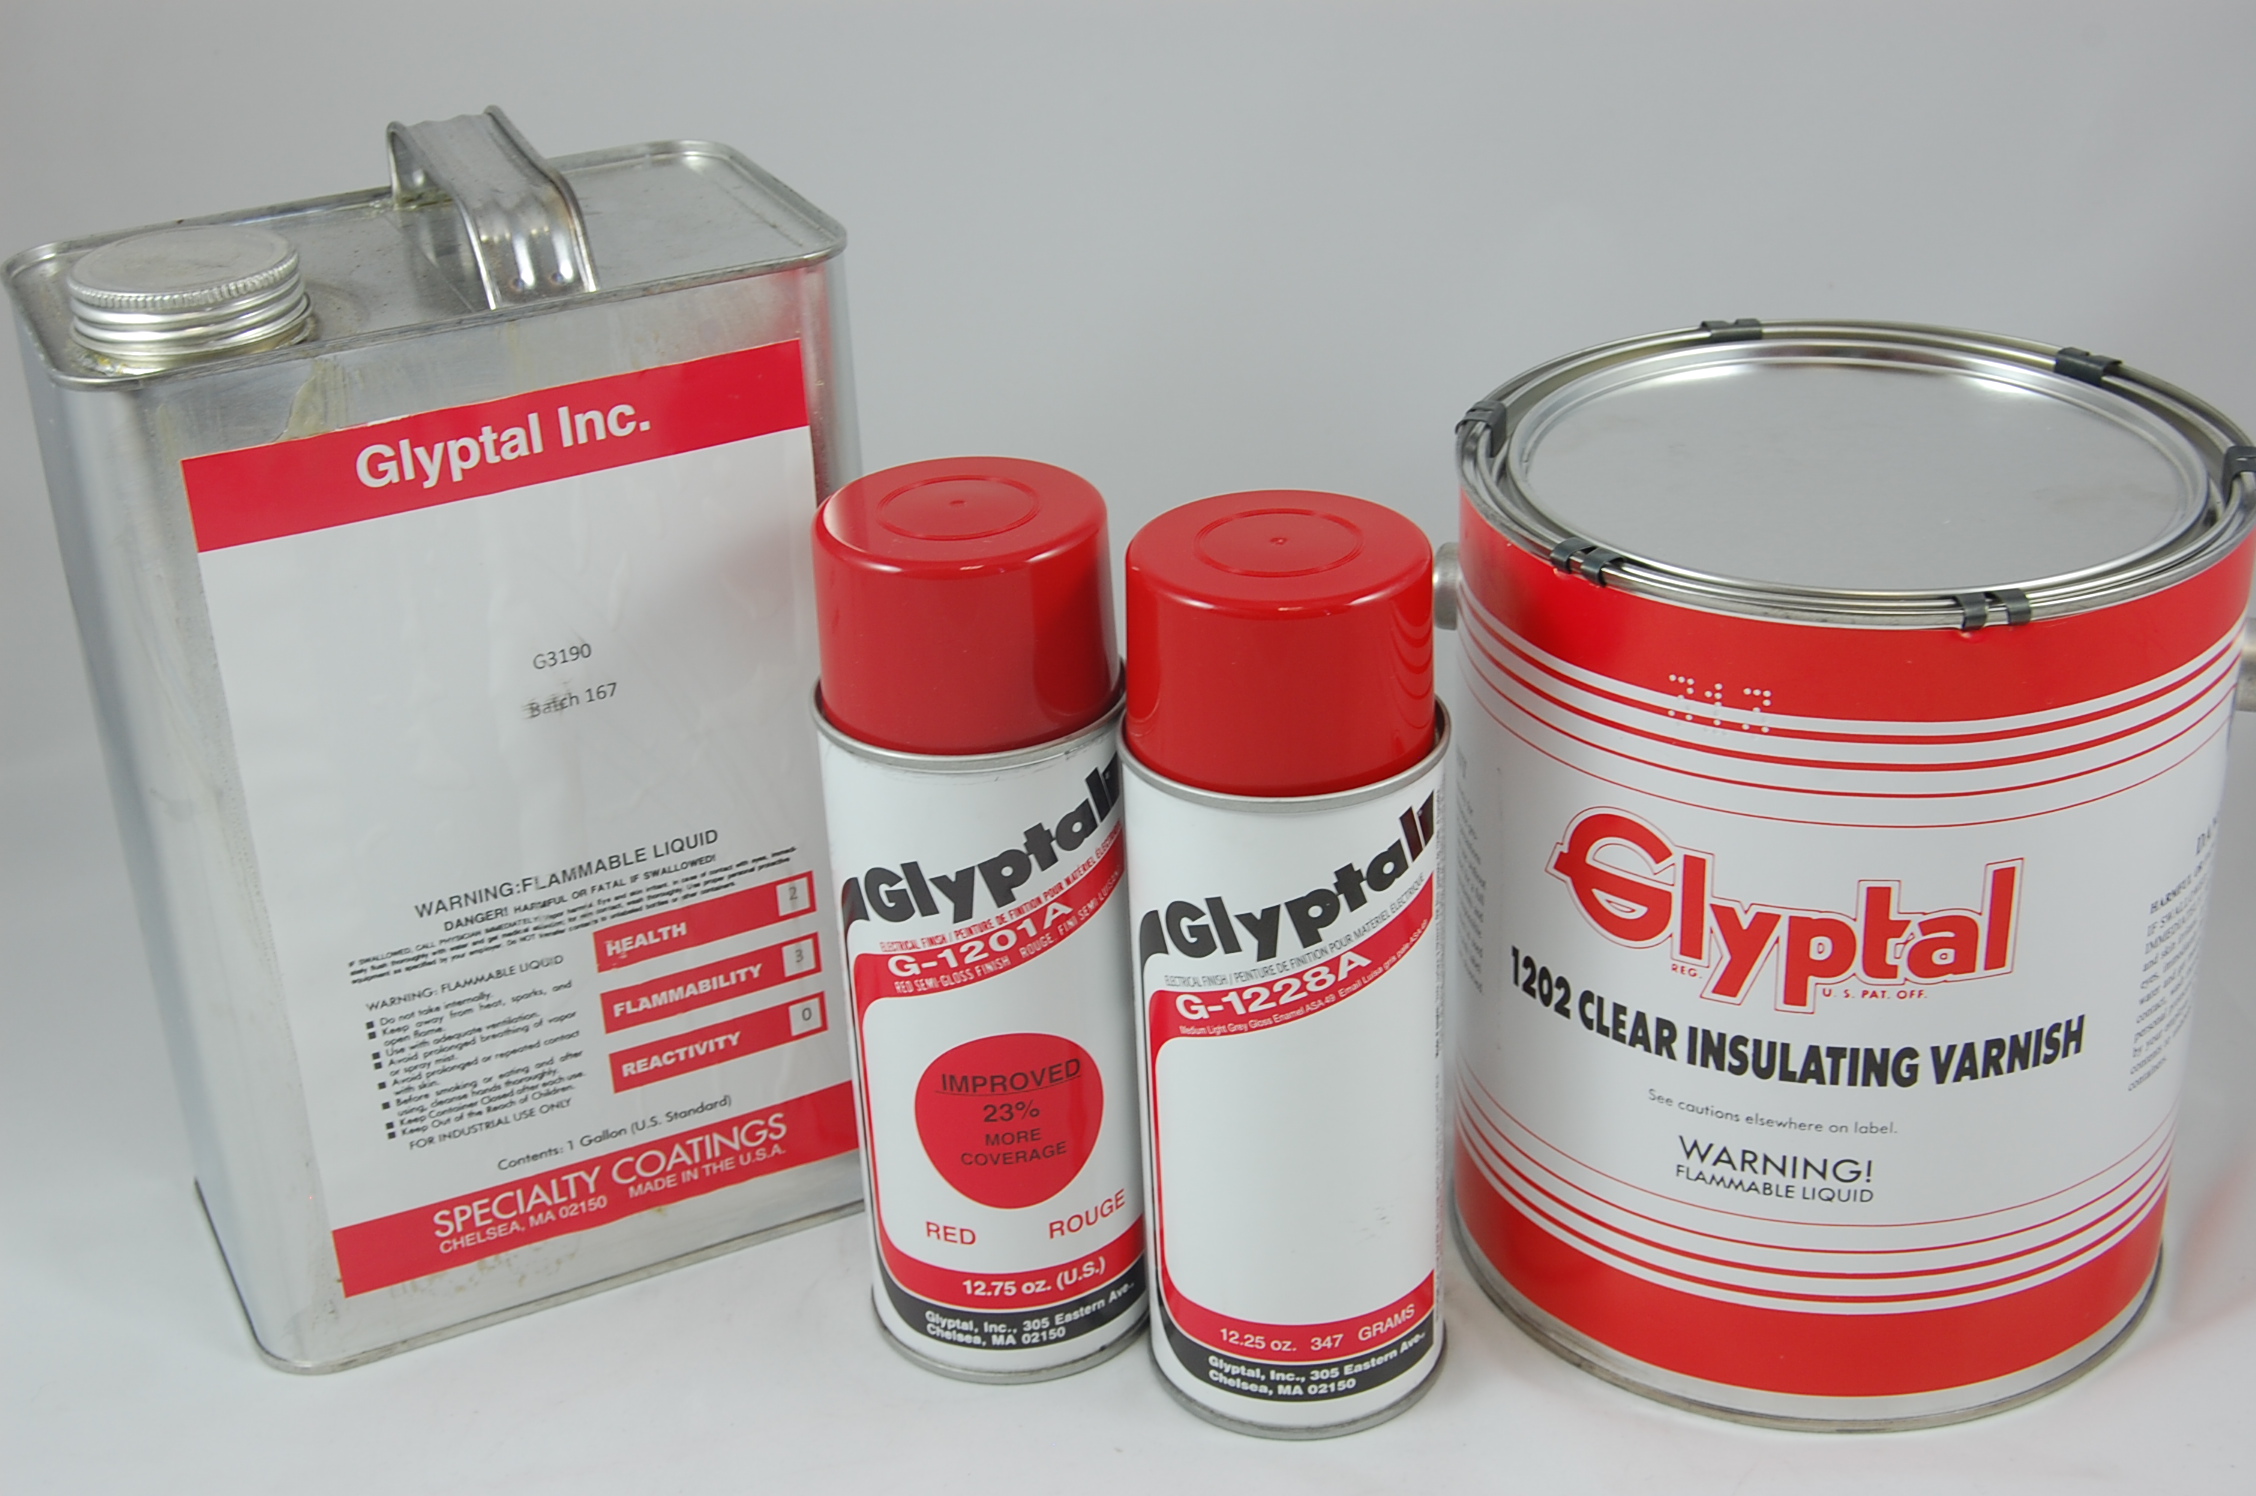 Glyptal S-1195 Resinour Reducer, translucent, 1 GALLON can